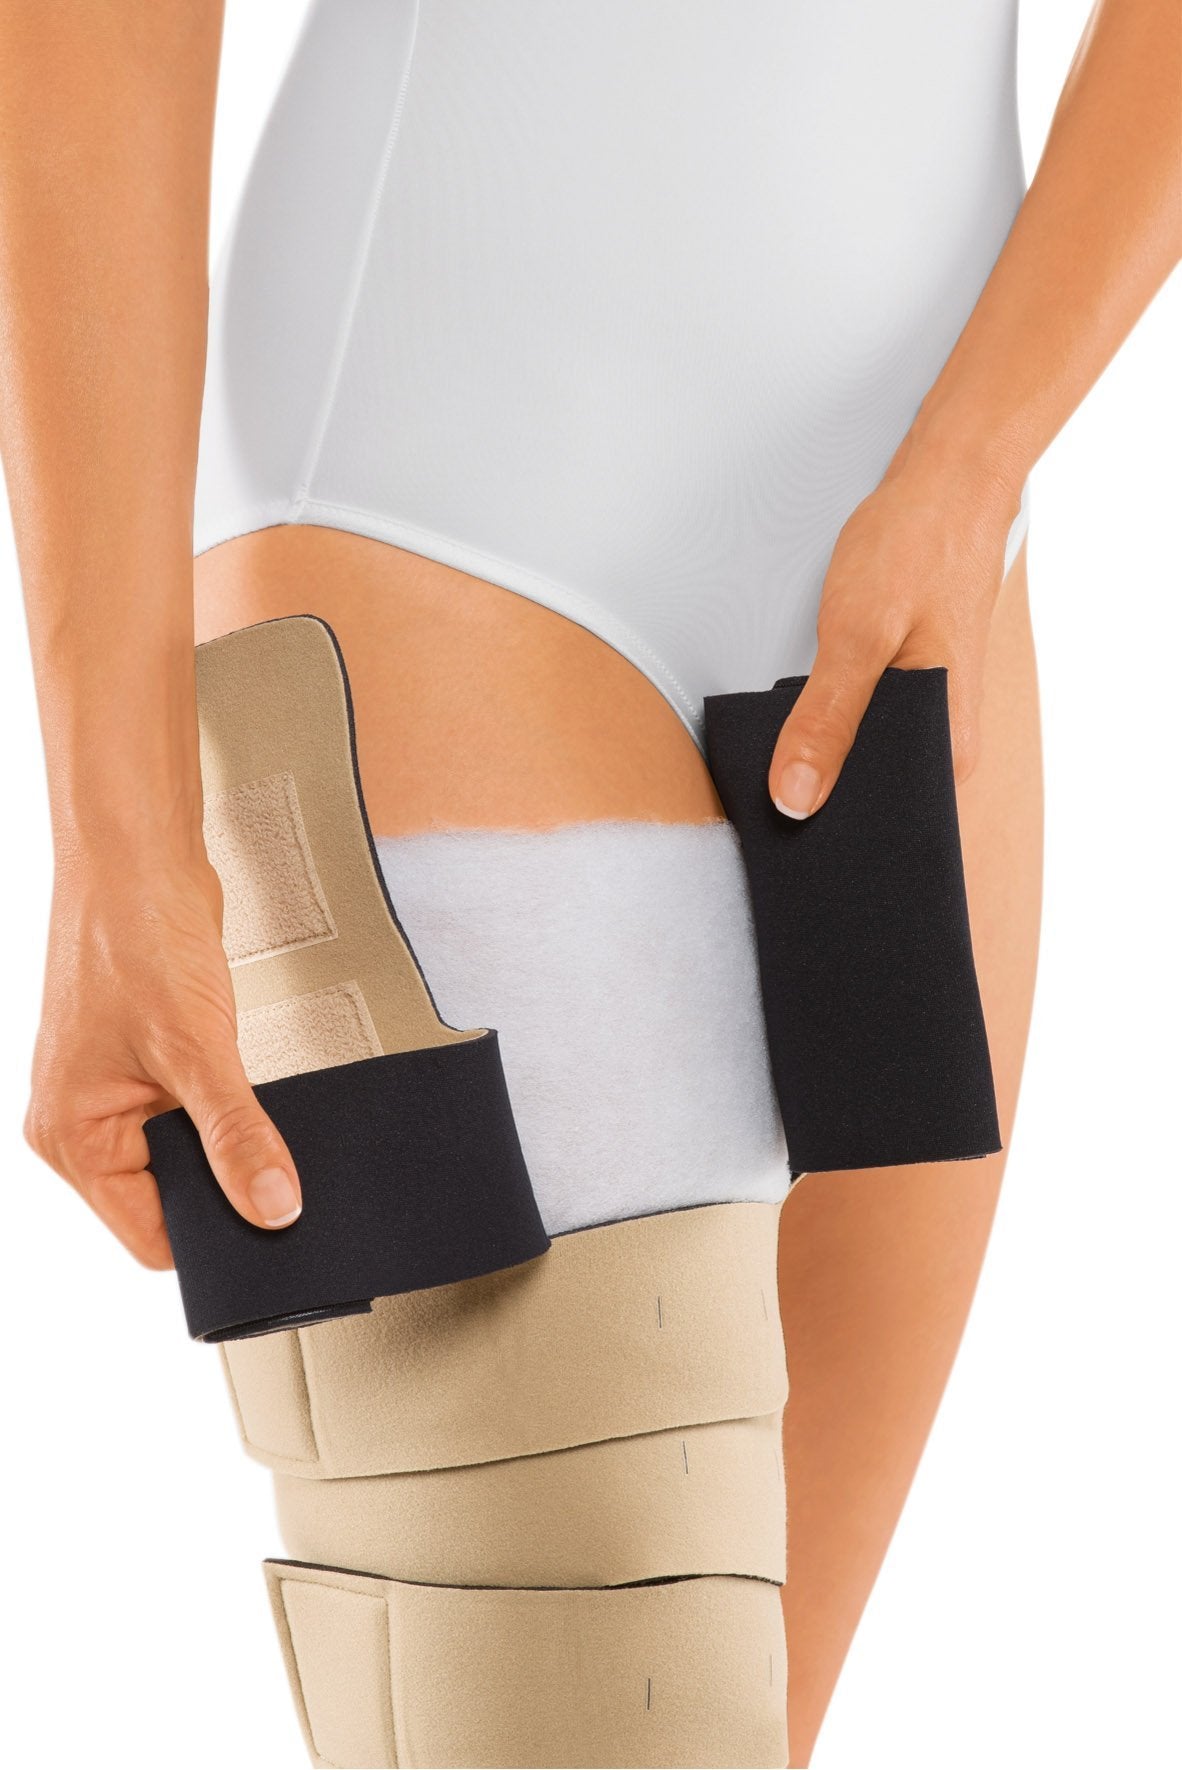 circaid reduction kit knee